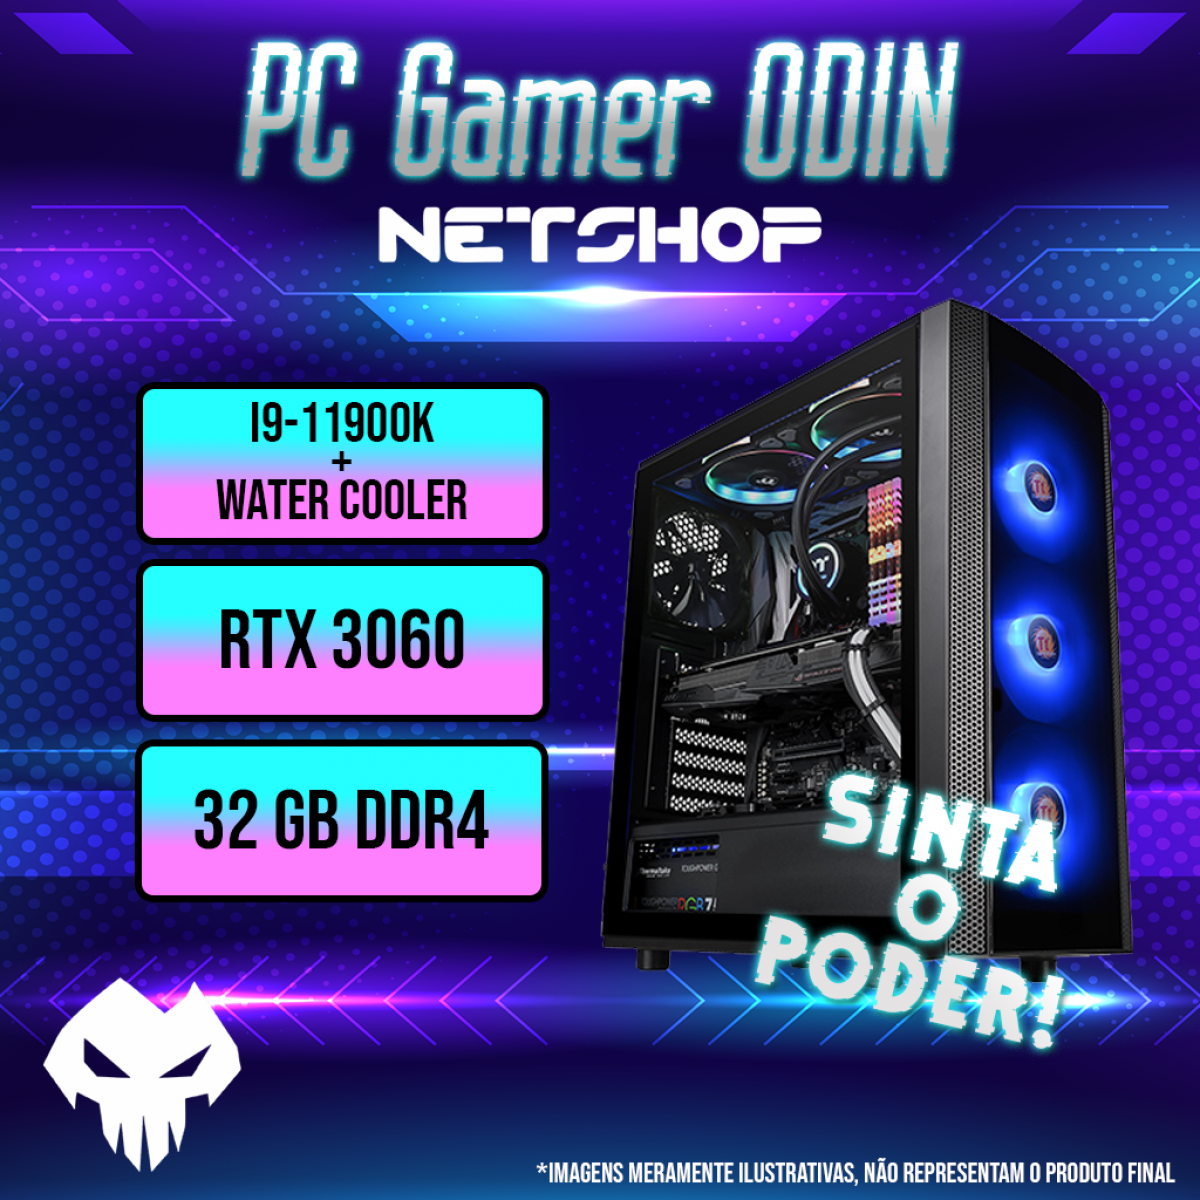 PC Gamer Barato em Brasília, Netshop